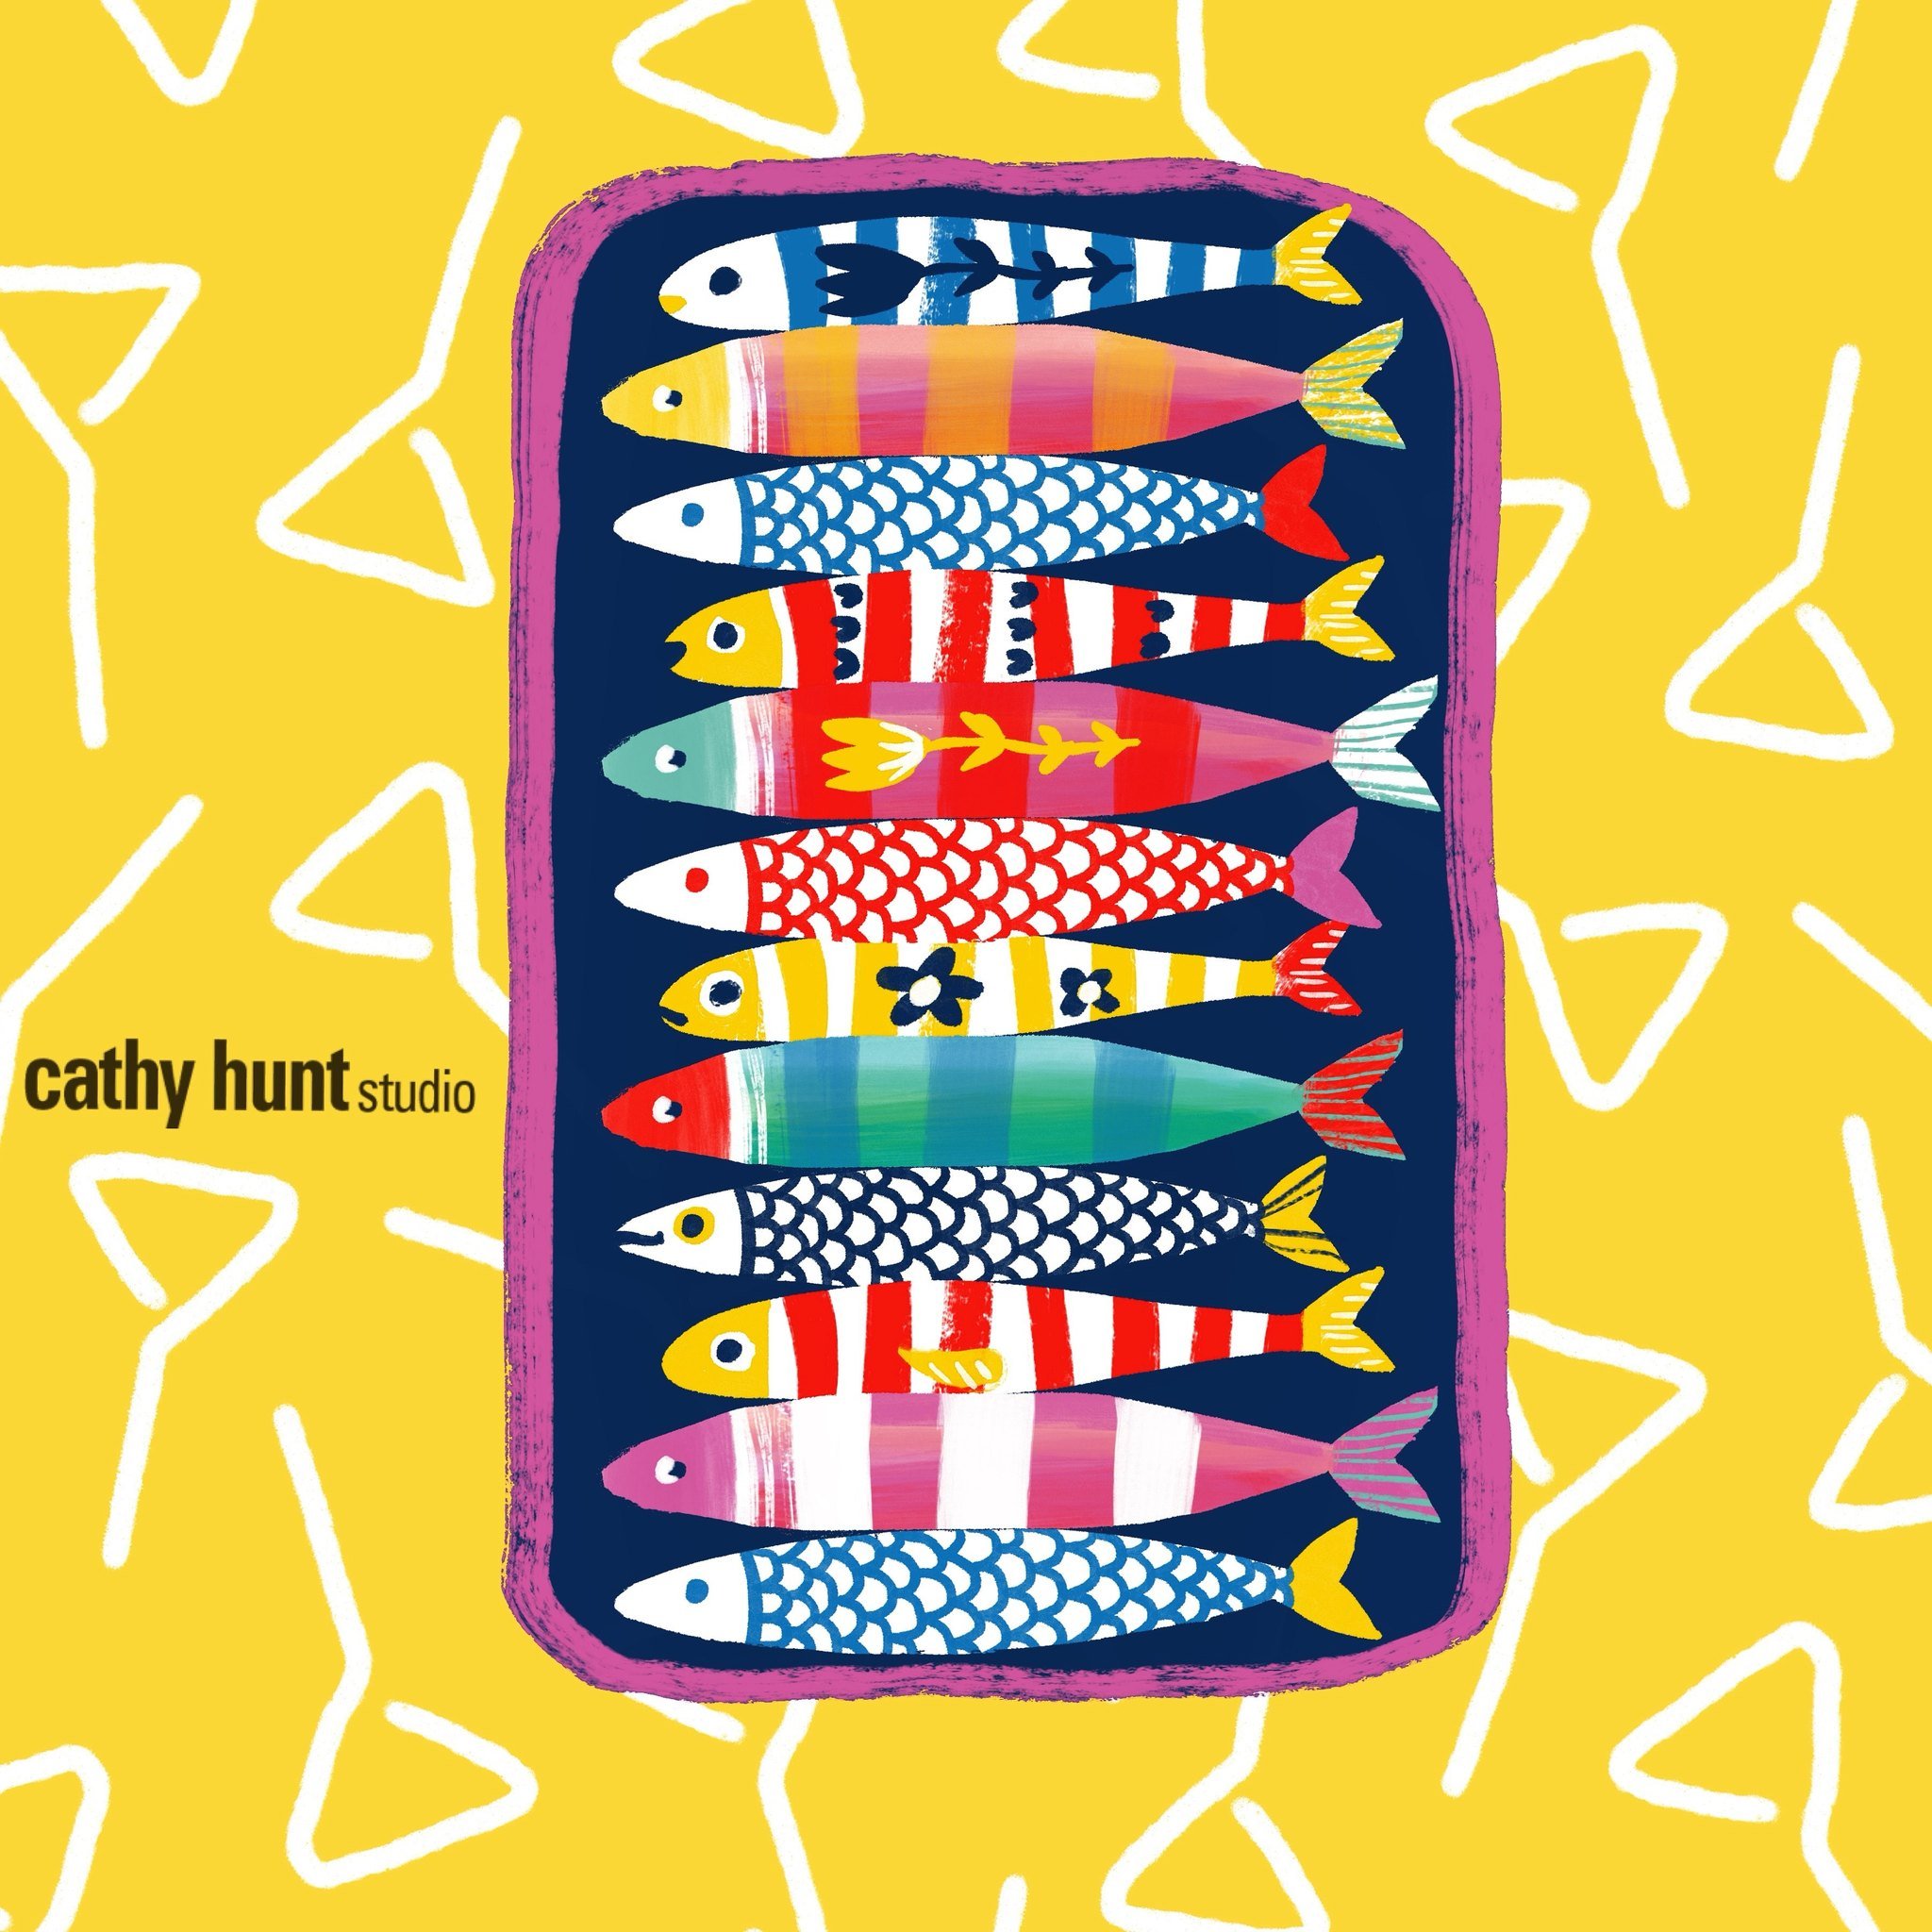 Sardines!
-
#sardines #sardine #sardinas #riviera #cathyhunt #fish #illustration #fishillustration #illustratedfood #greetingcarddesign #greetingcards #theydrawandcook #surfacepatterndesign #surfacedesign #coastalart #nauticalart